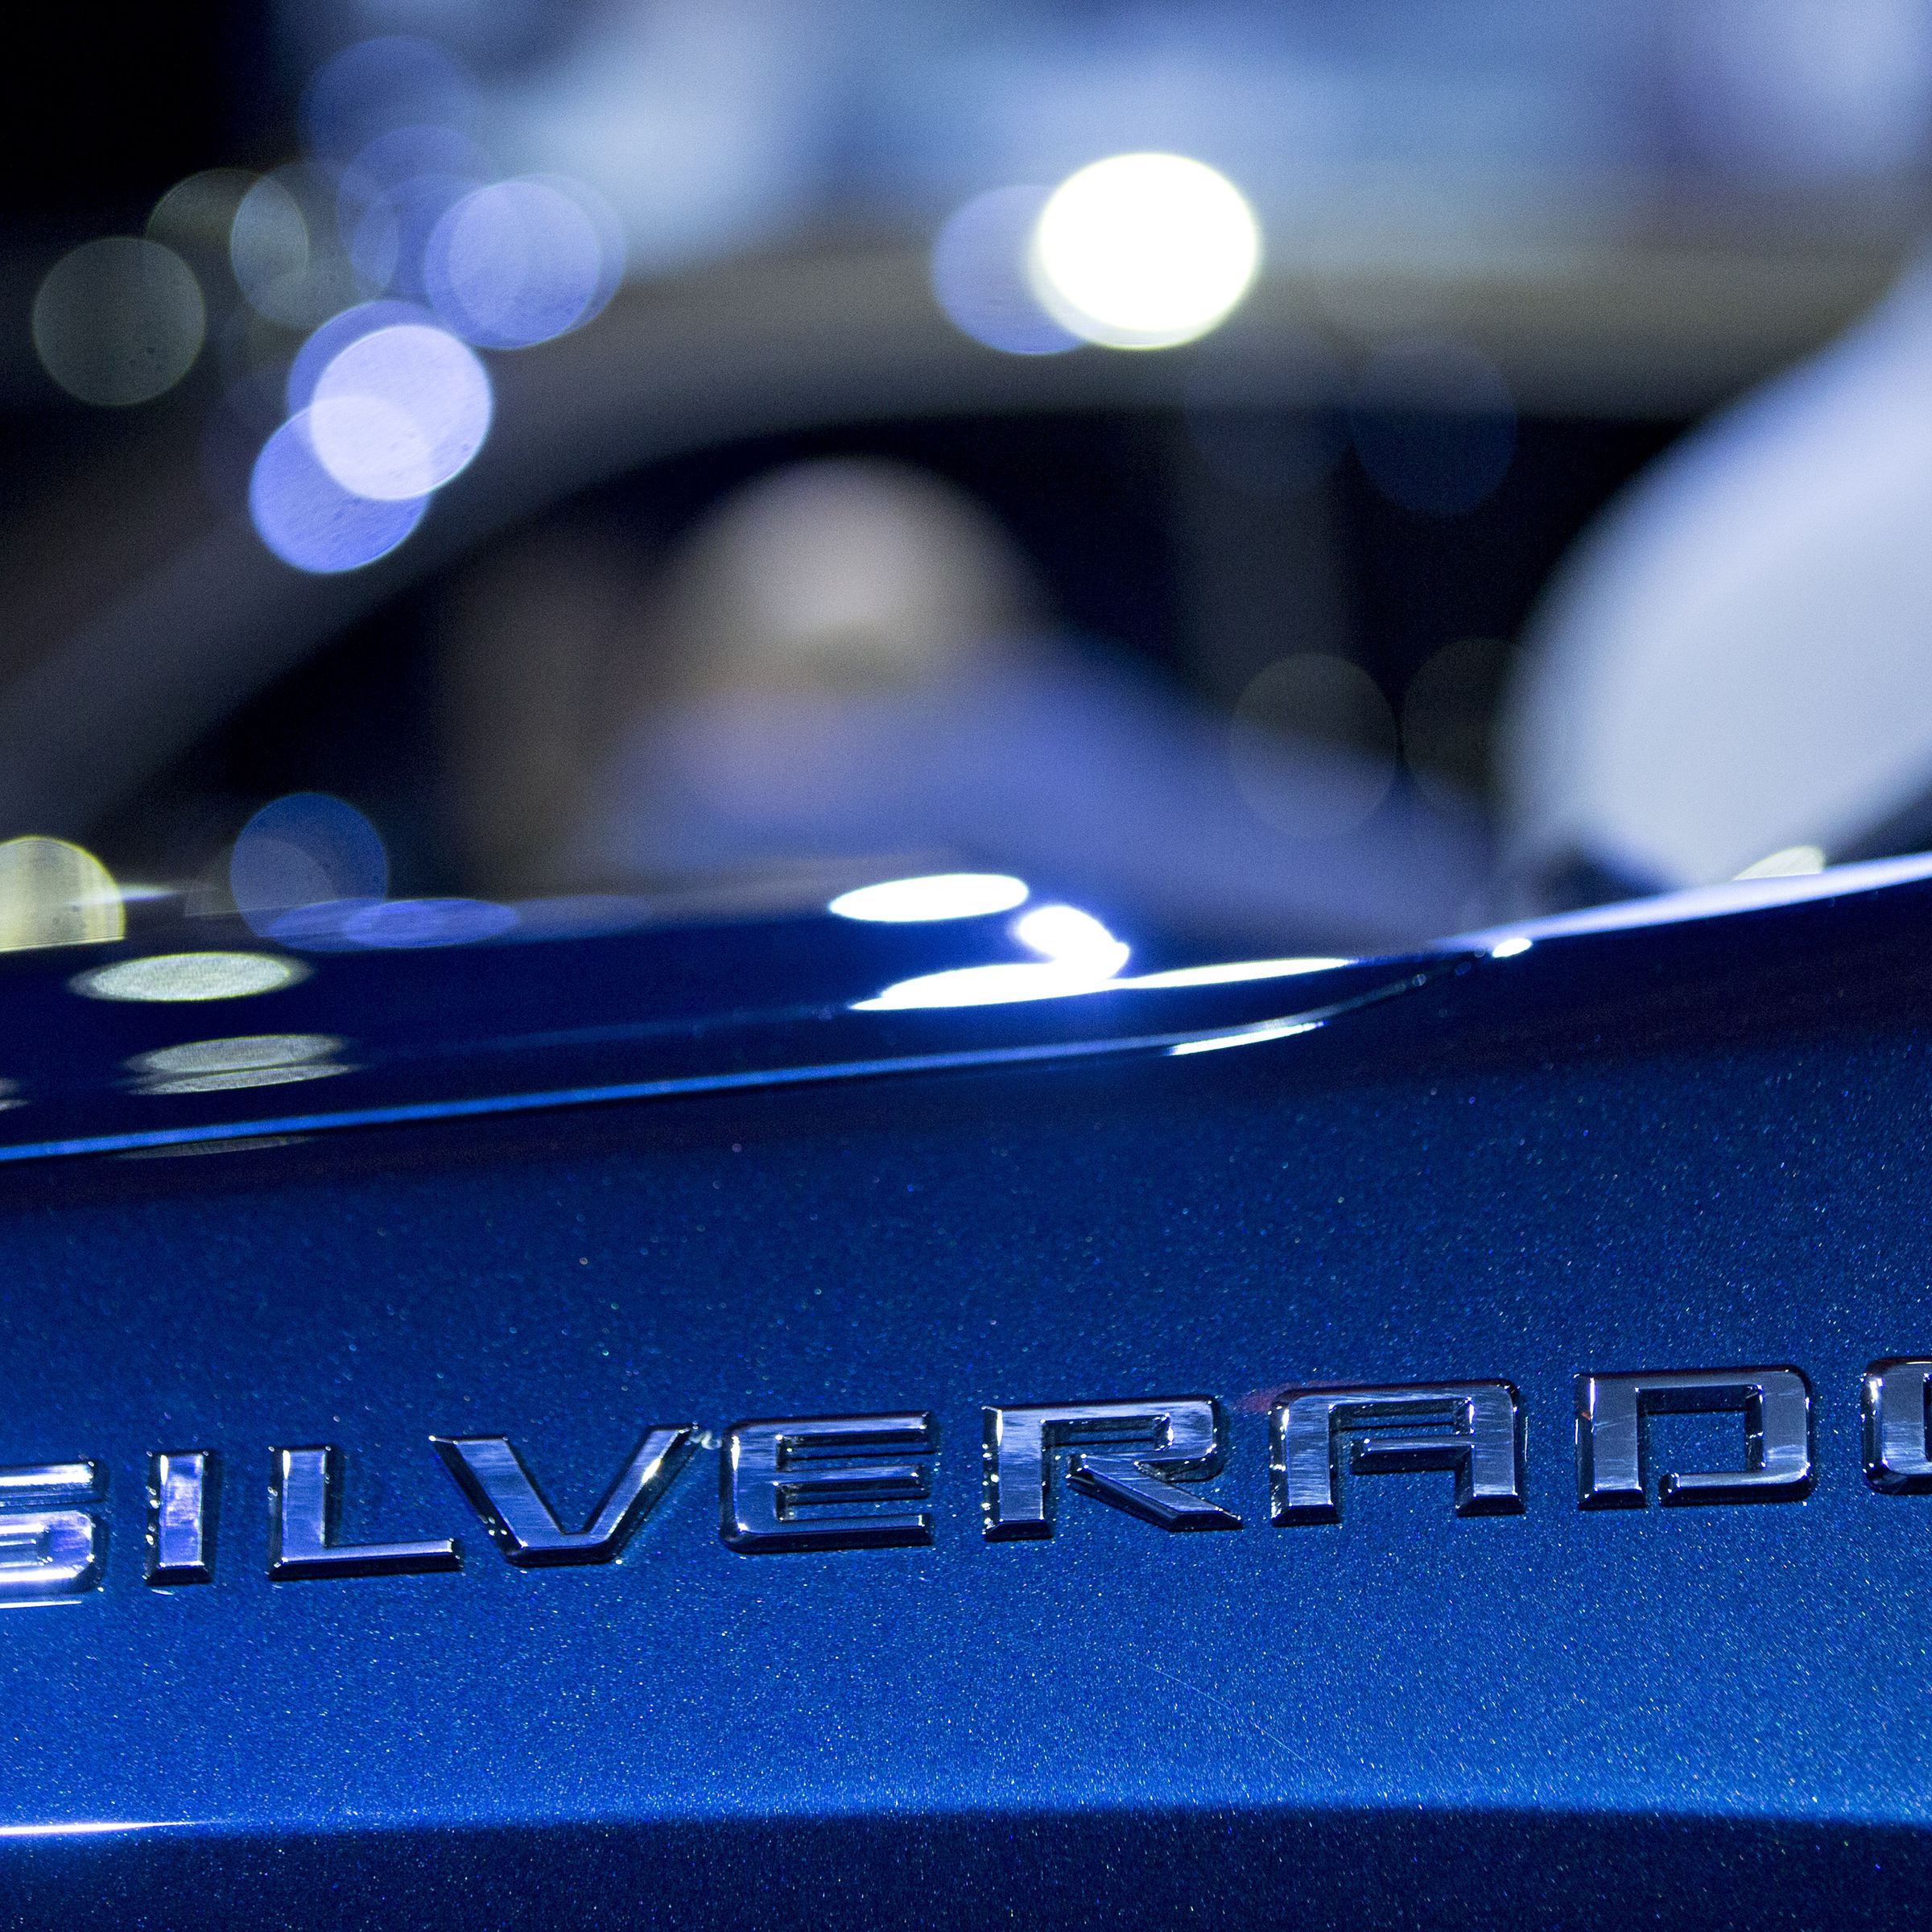 Chevrolet 2019 Silverado Reveal Event Ahead Of The 2018 North American International Auto Show